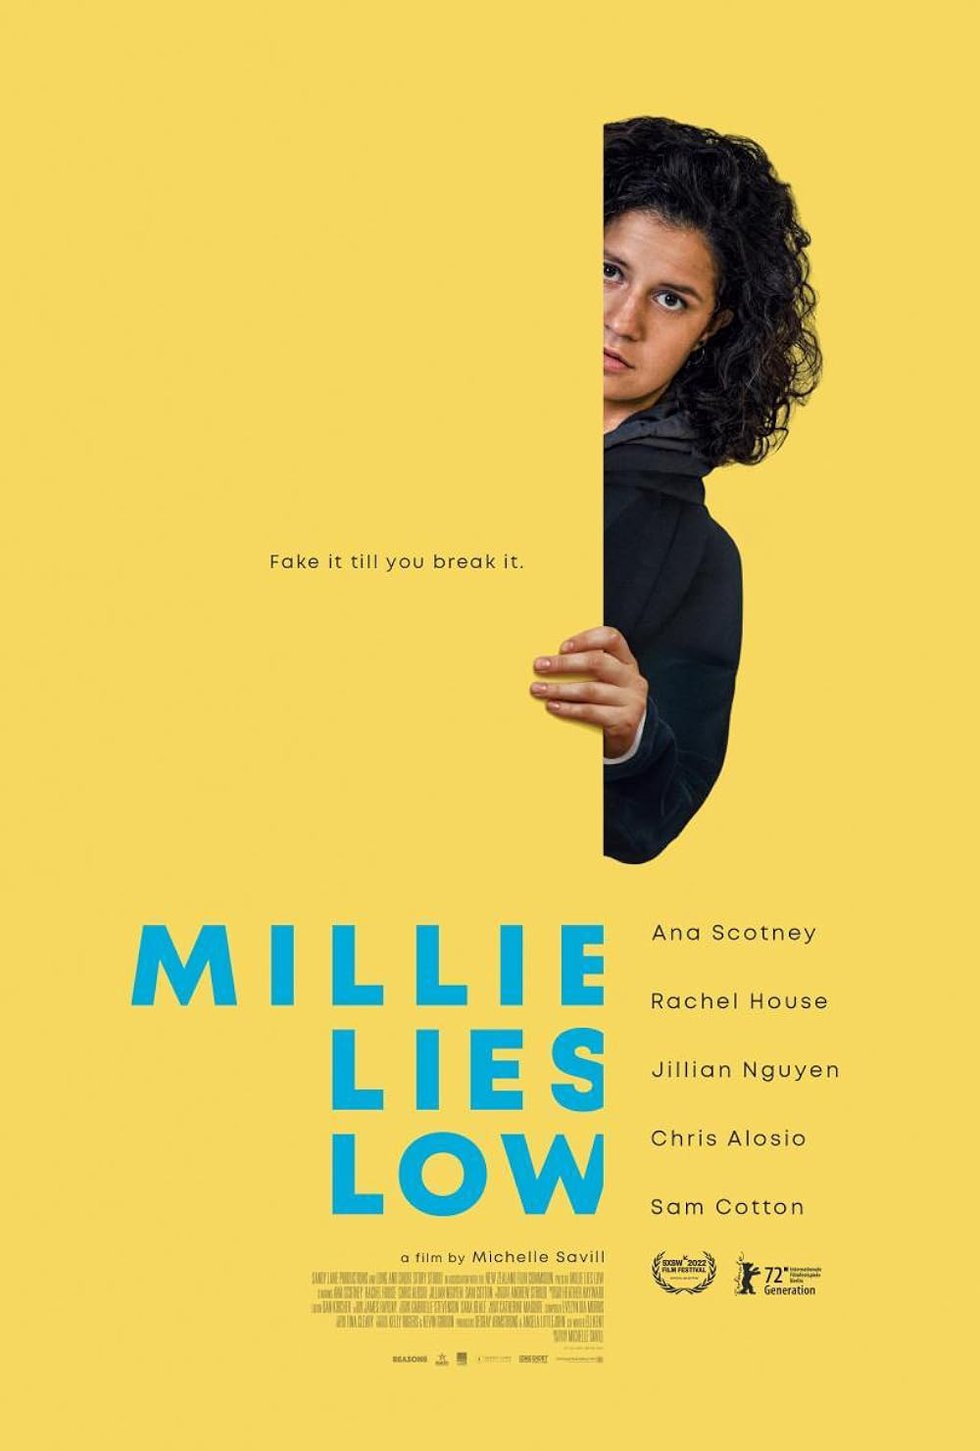 Millie Lies Low Drama Film